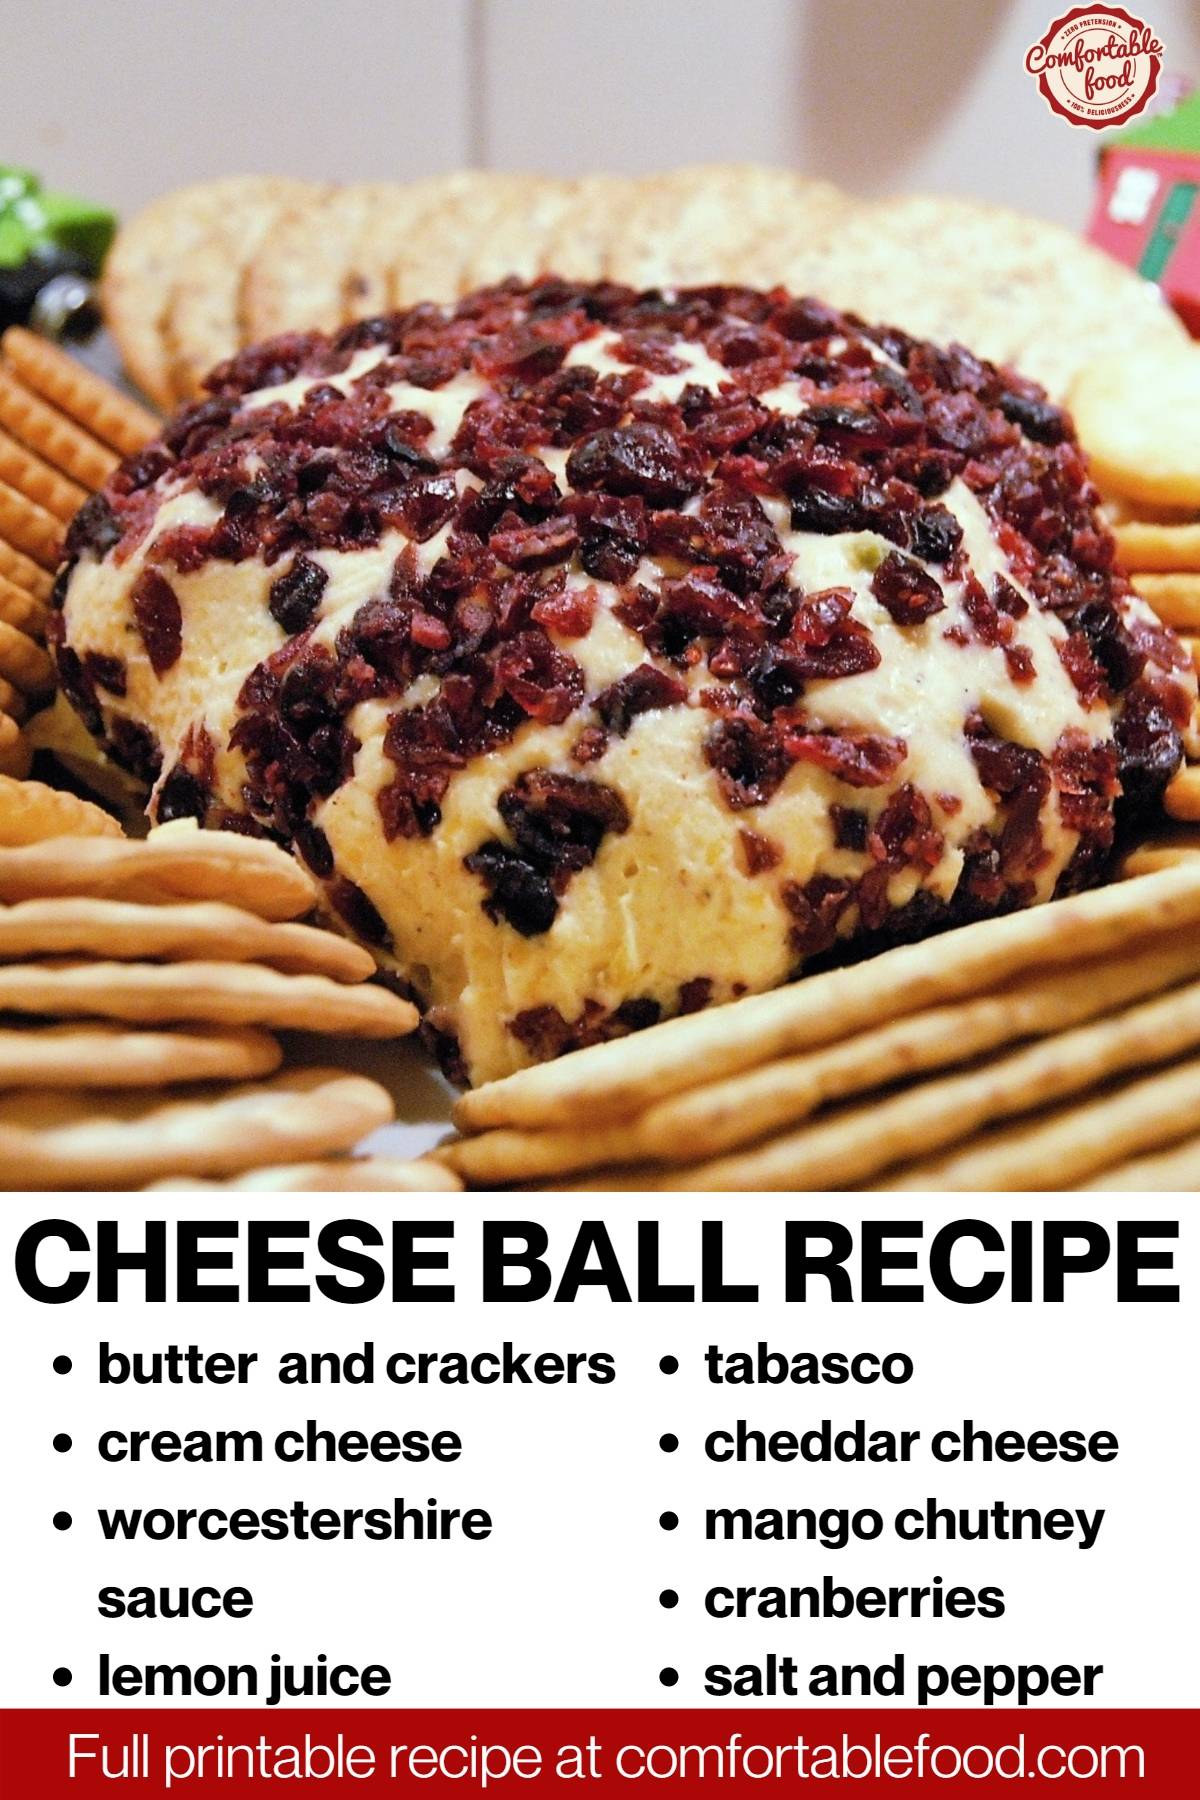 Cheese ball recipe socials